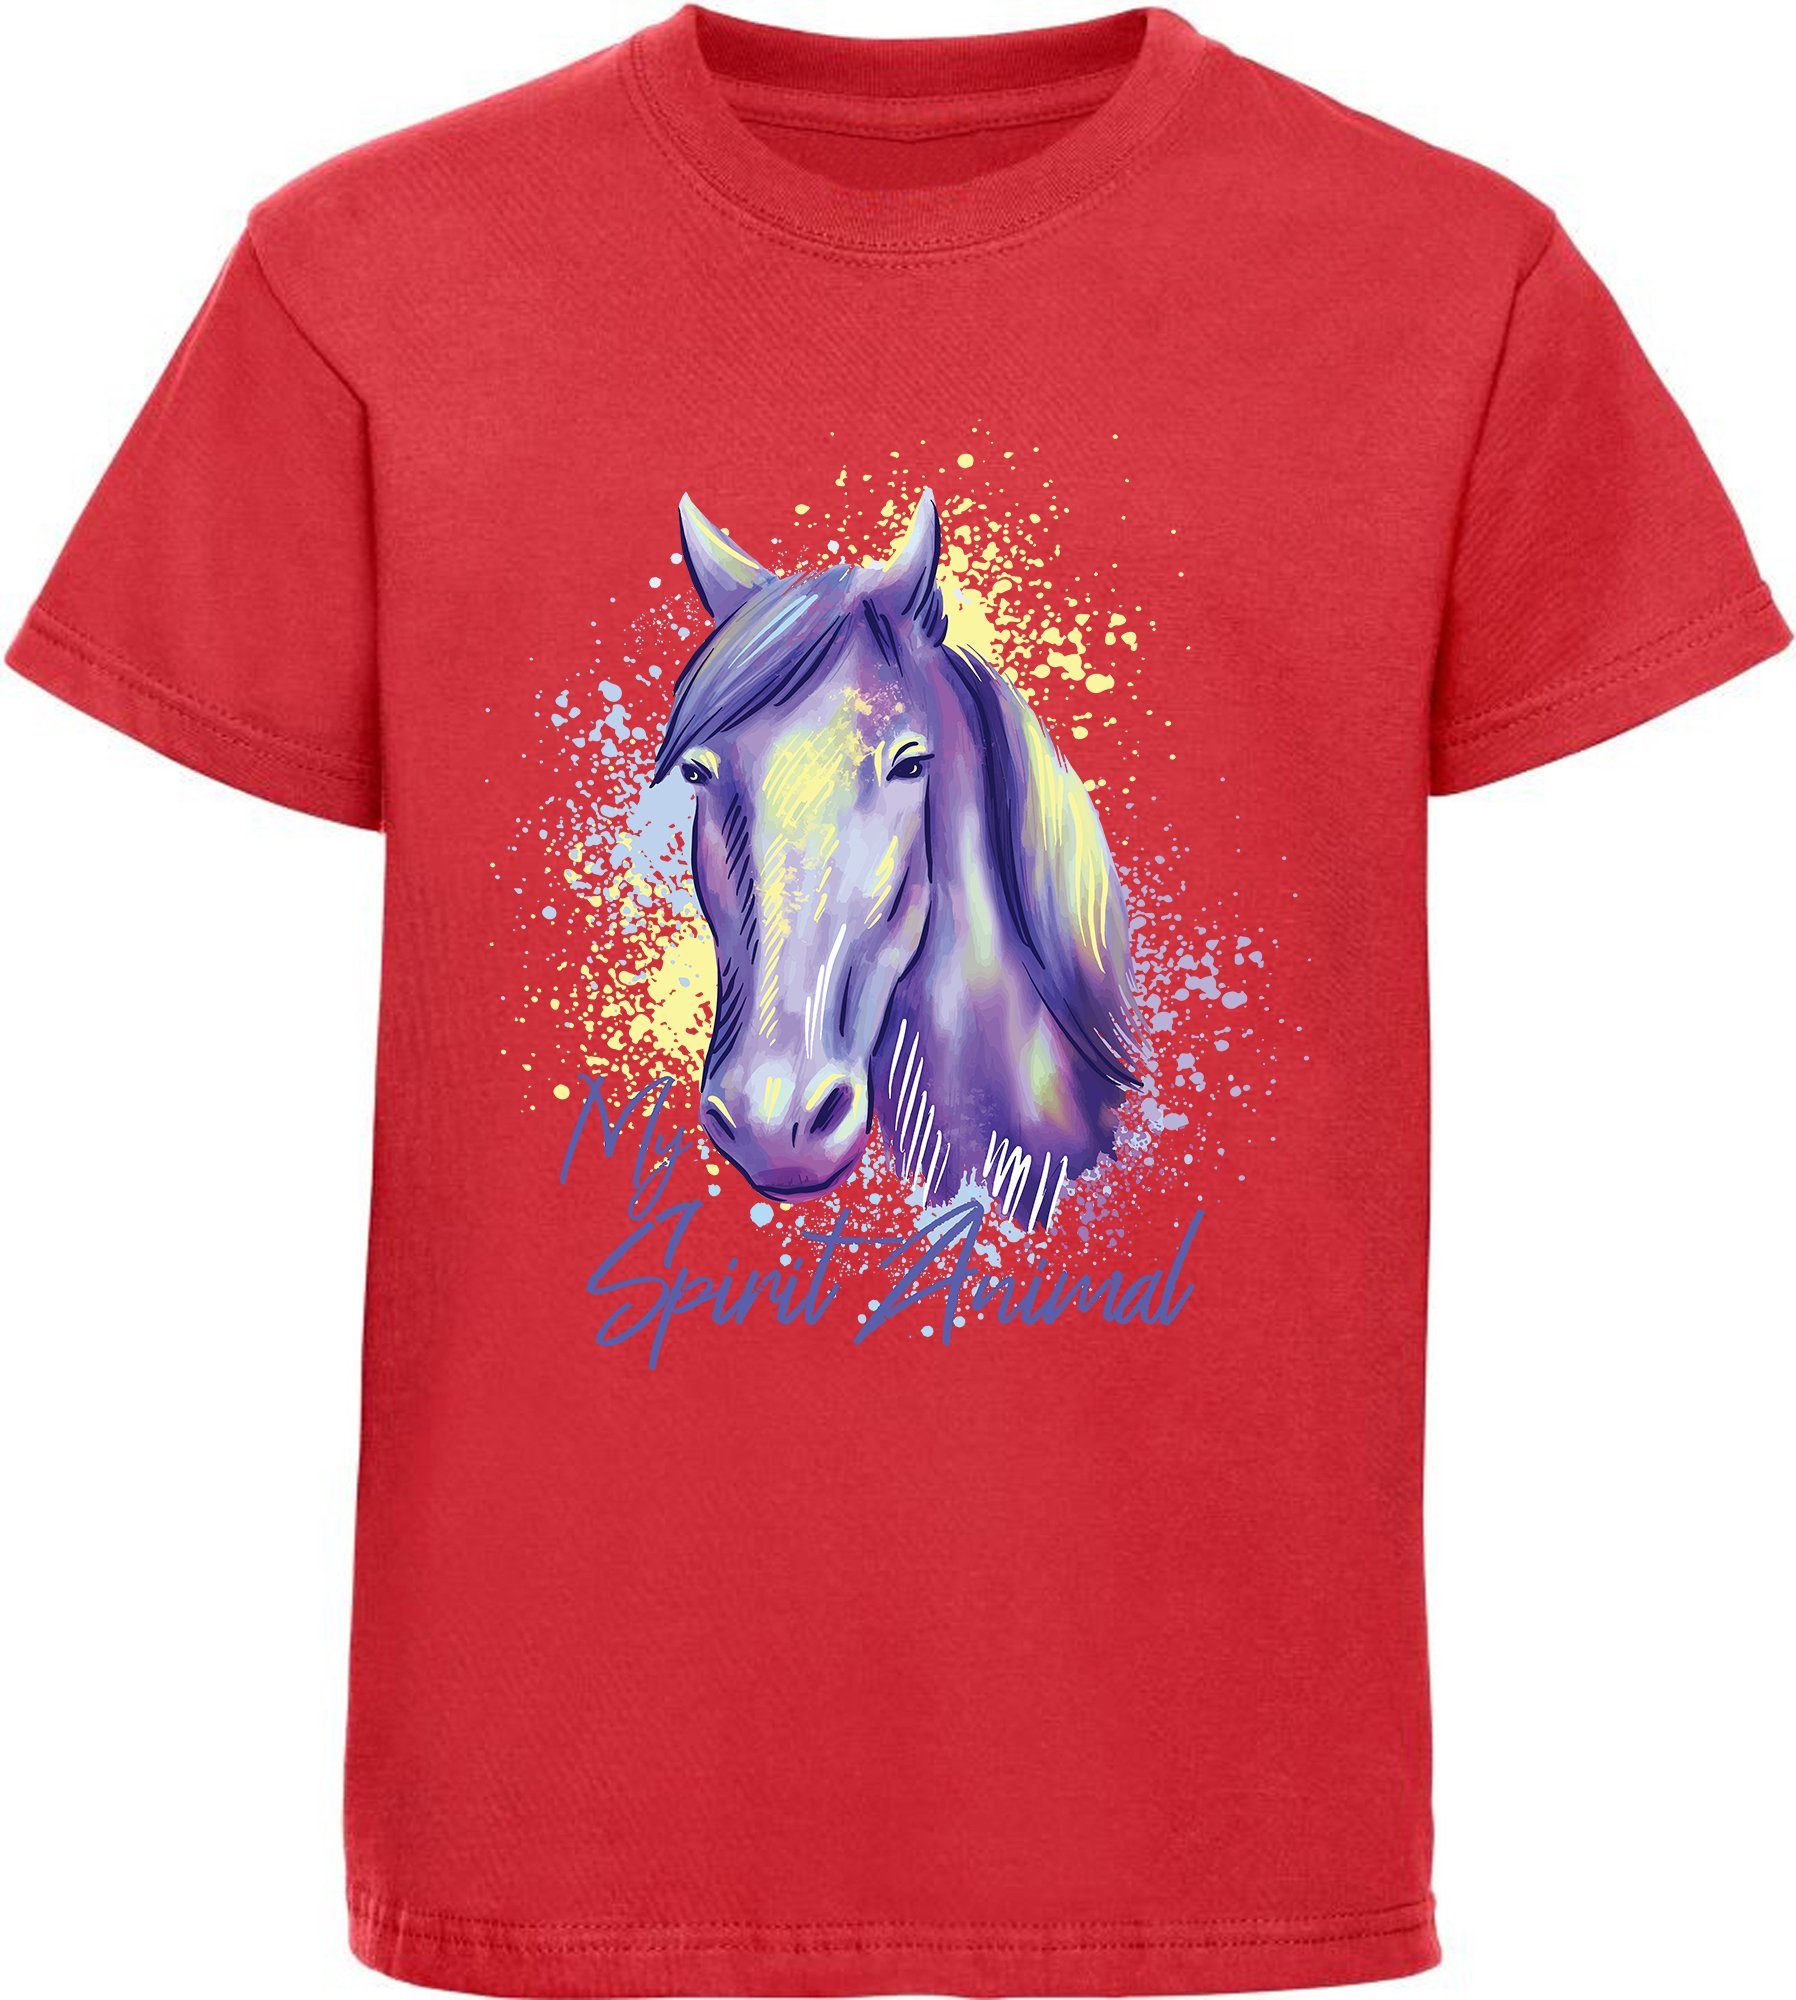 MyDesign24 Print-Shirt bedrucktes Mädchen T-Shirt gemalter Pferdekopf Baumwollshirt mit Aufdruck, i158 rot